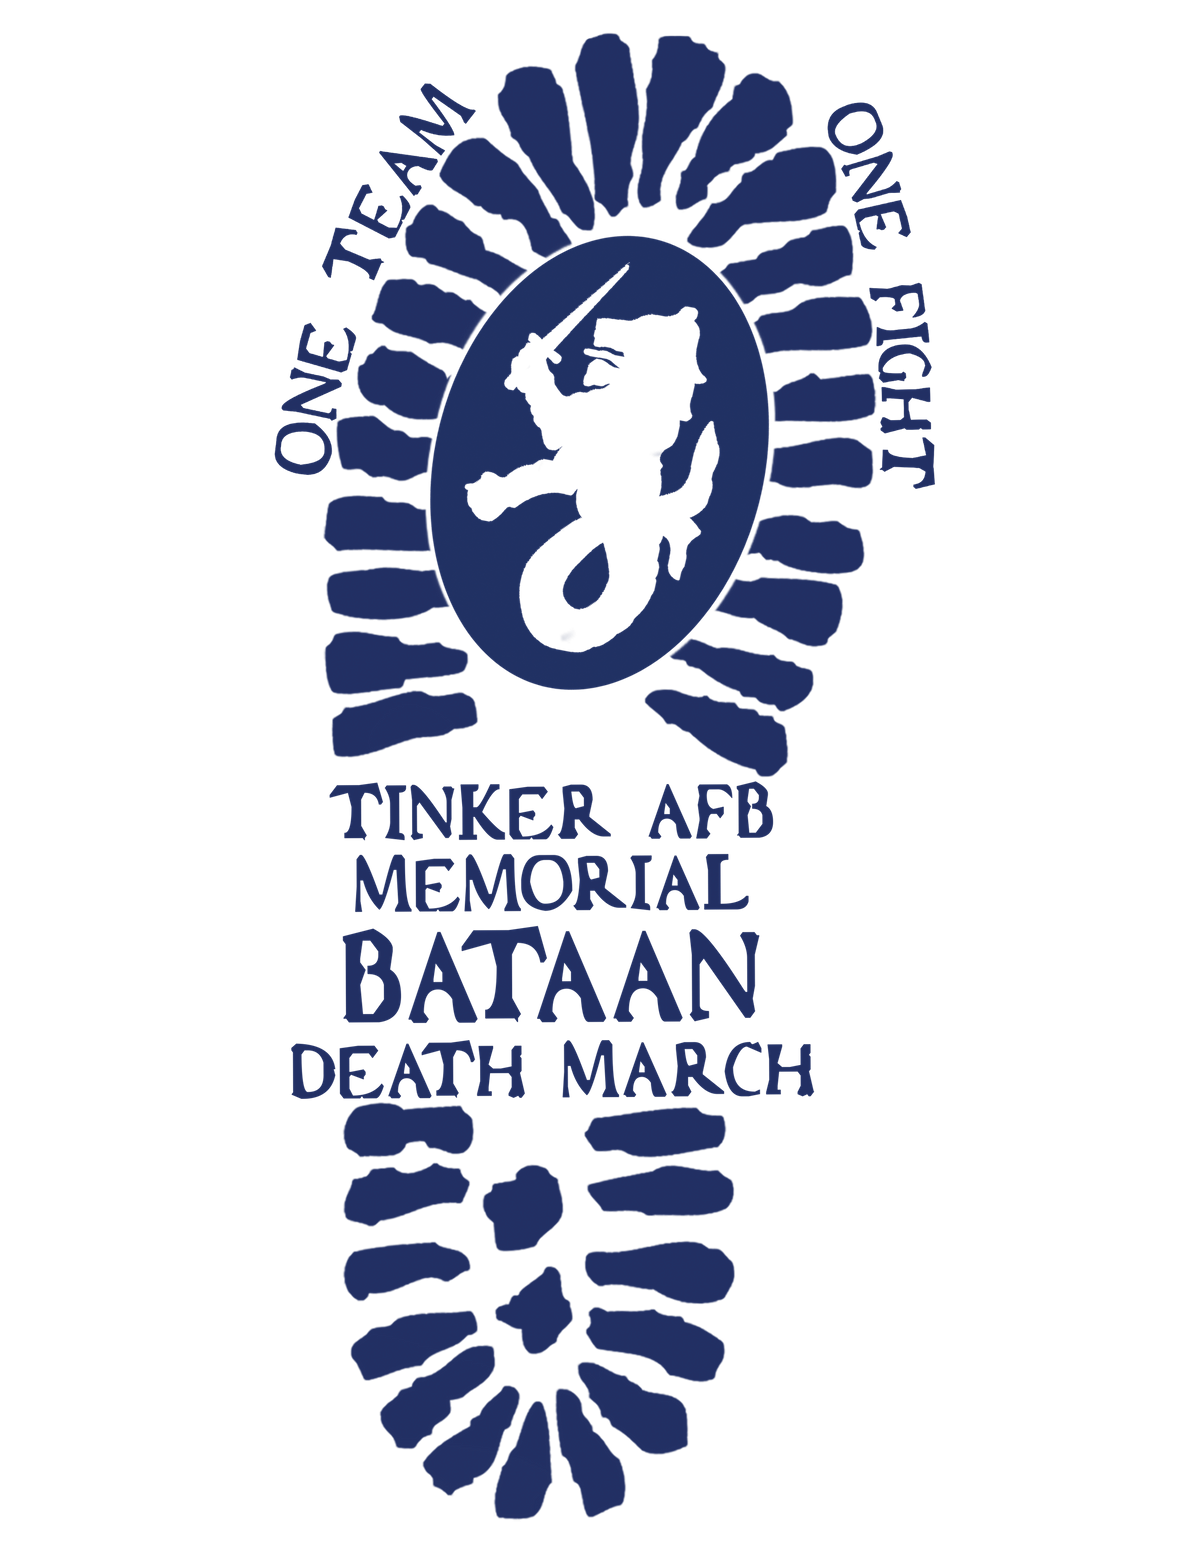 Tinker AFB Memorial Bataan Death March